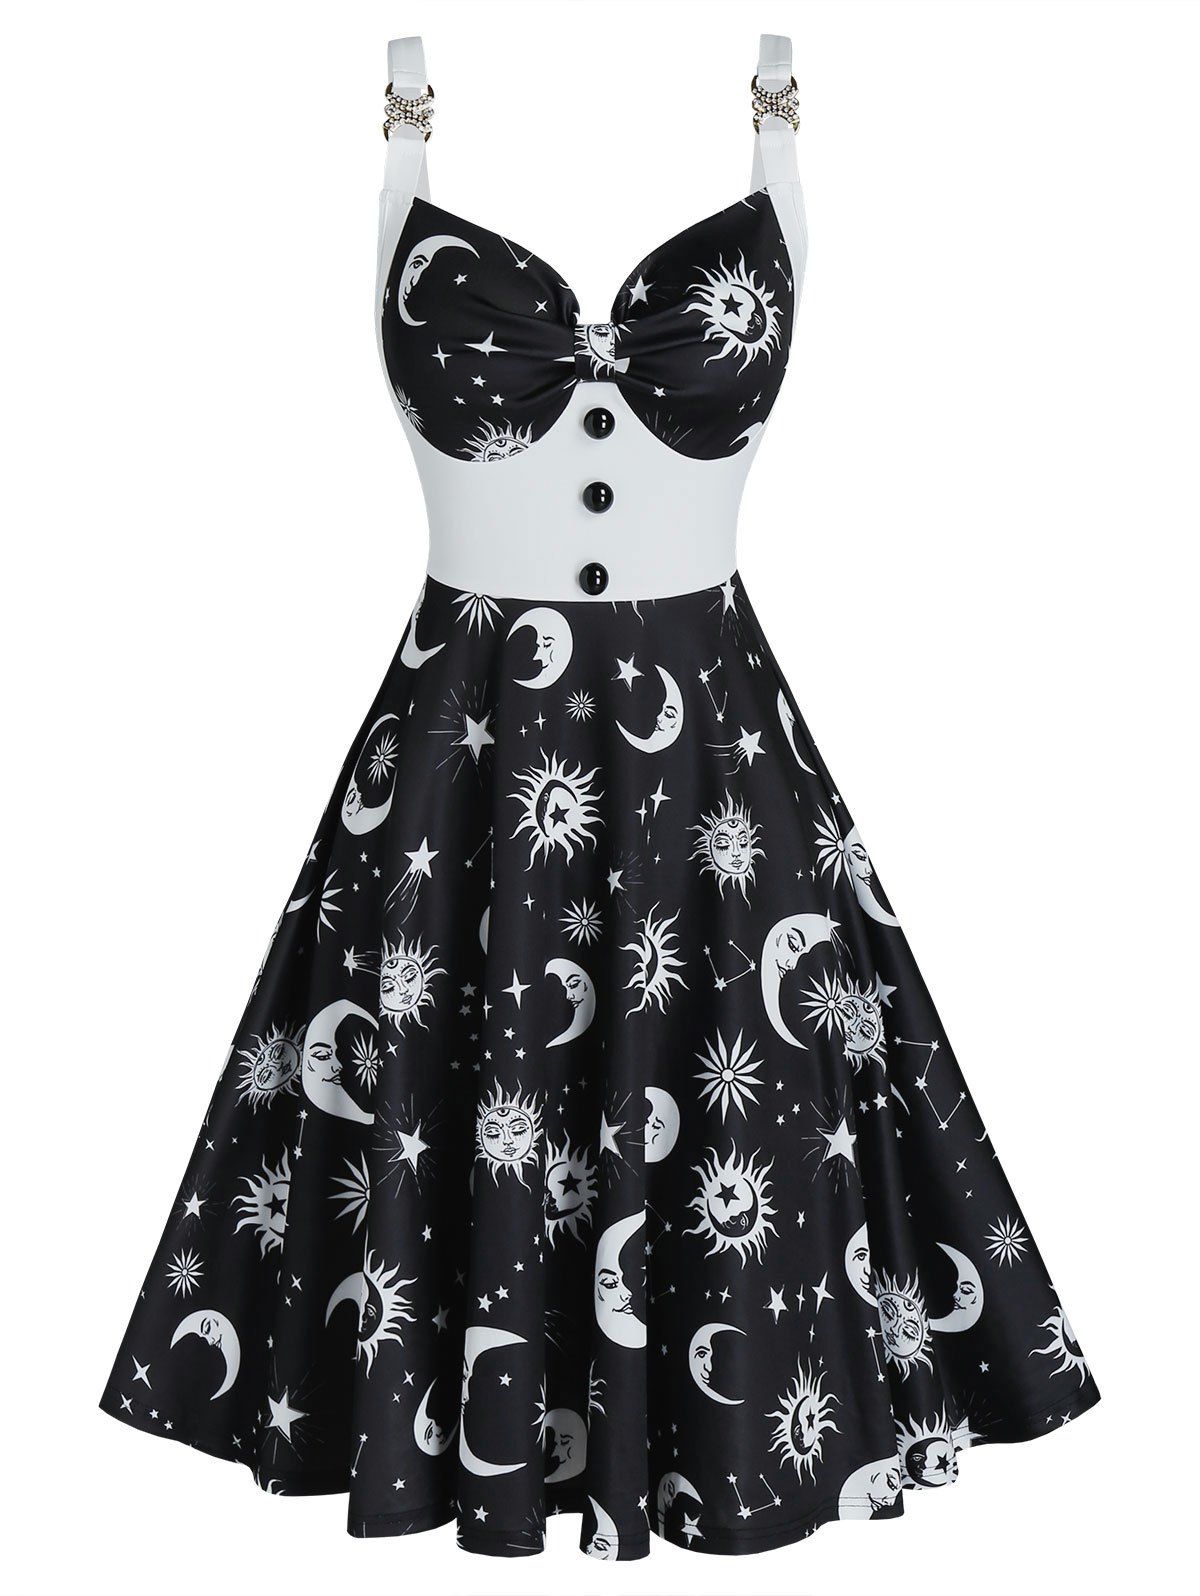 Sun Moon Star Print Sleeveless Flare Dress - BLACK XL